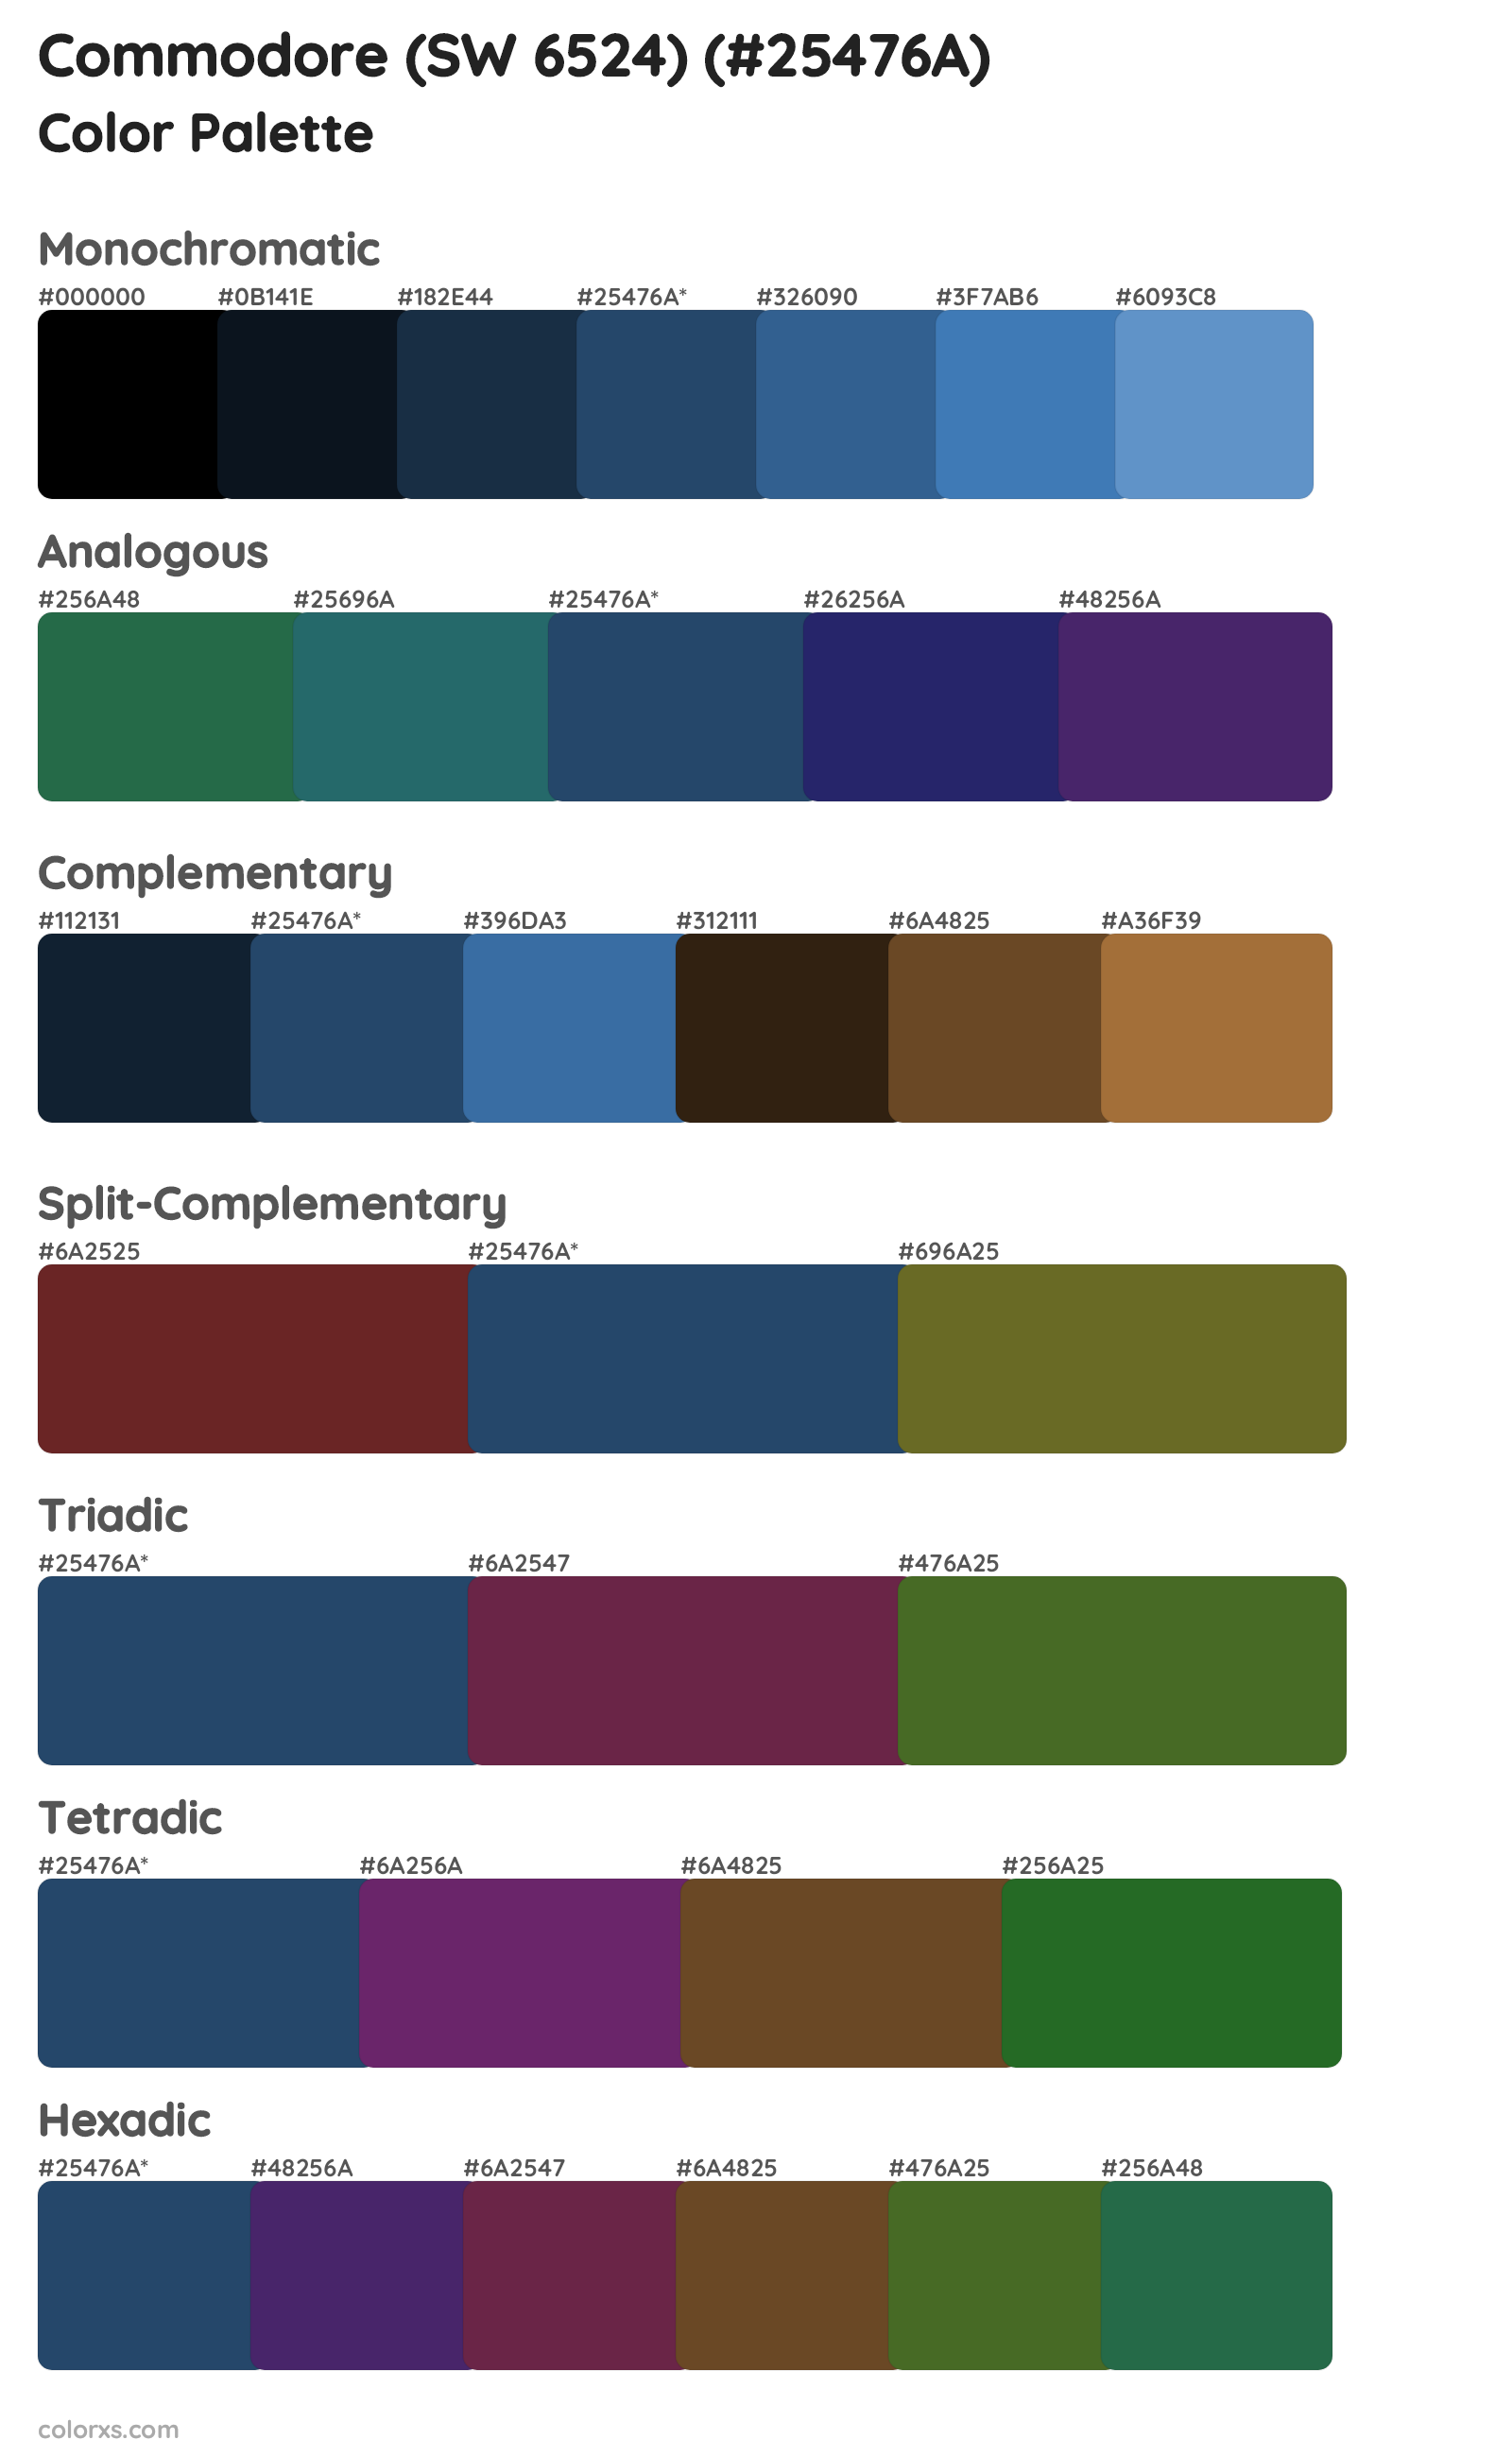 Commodore (SW 6524) Color Scheme Palettes